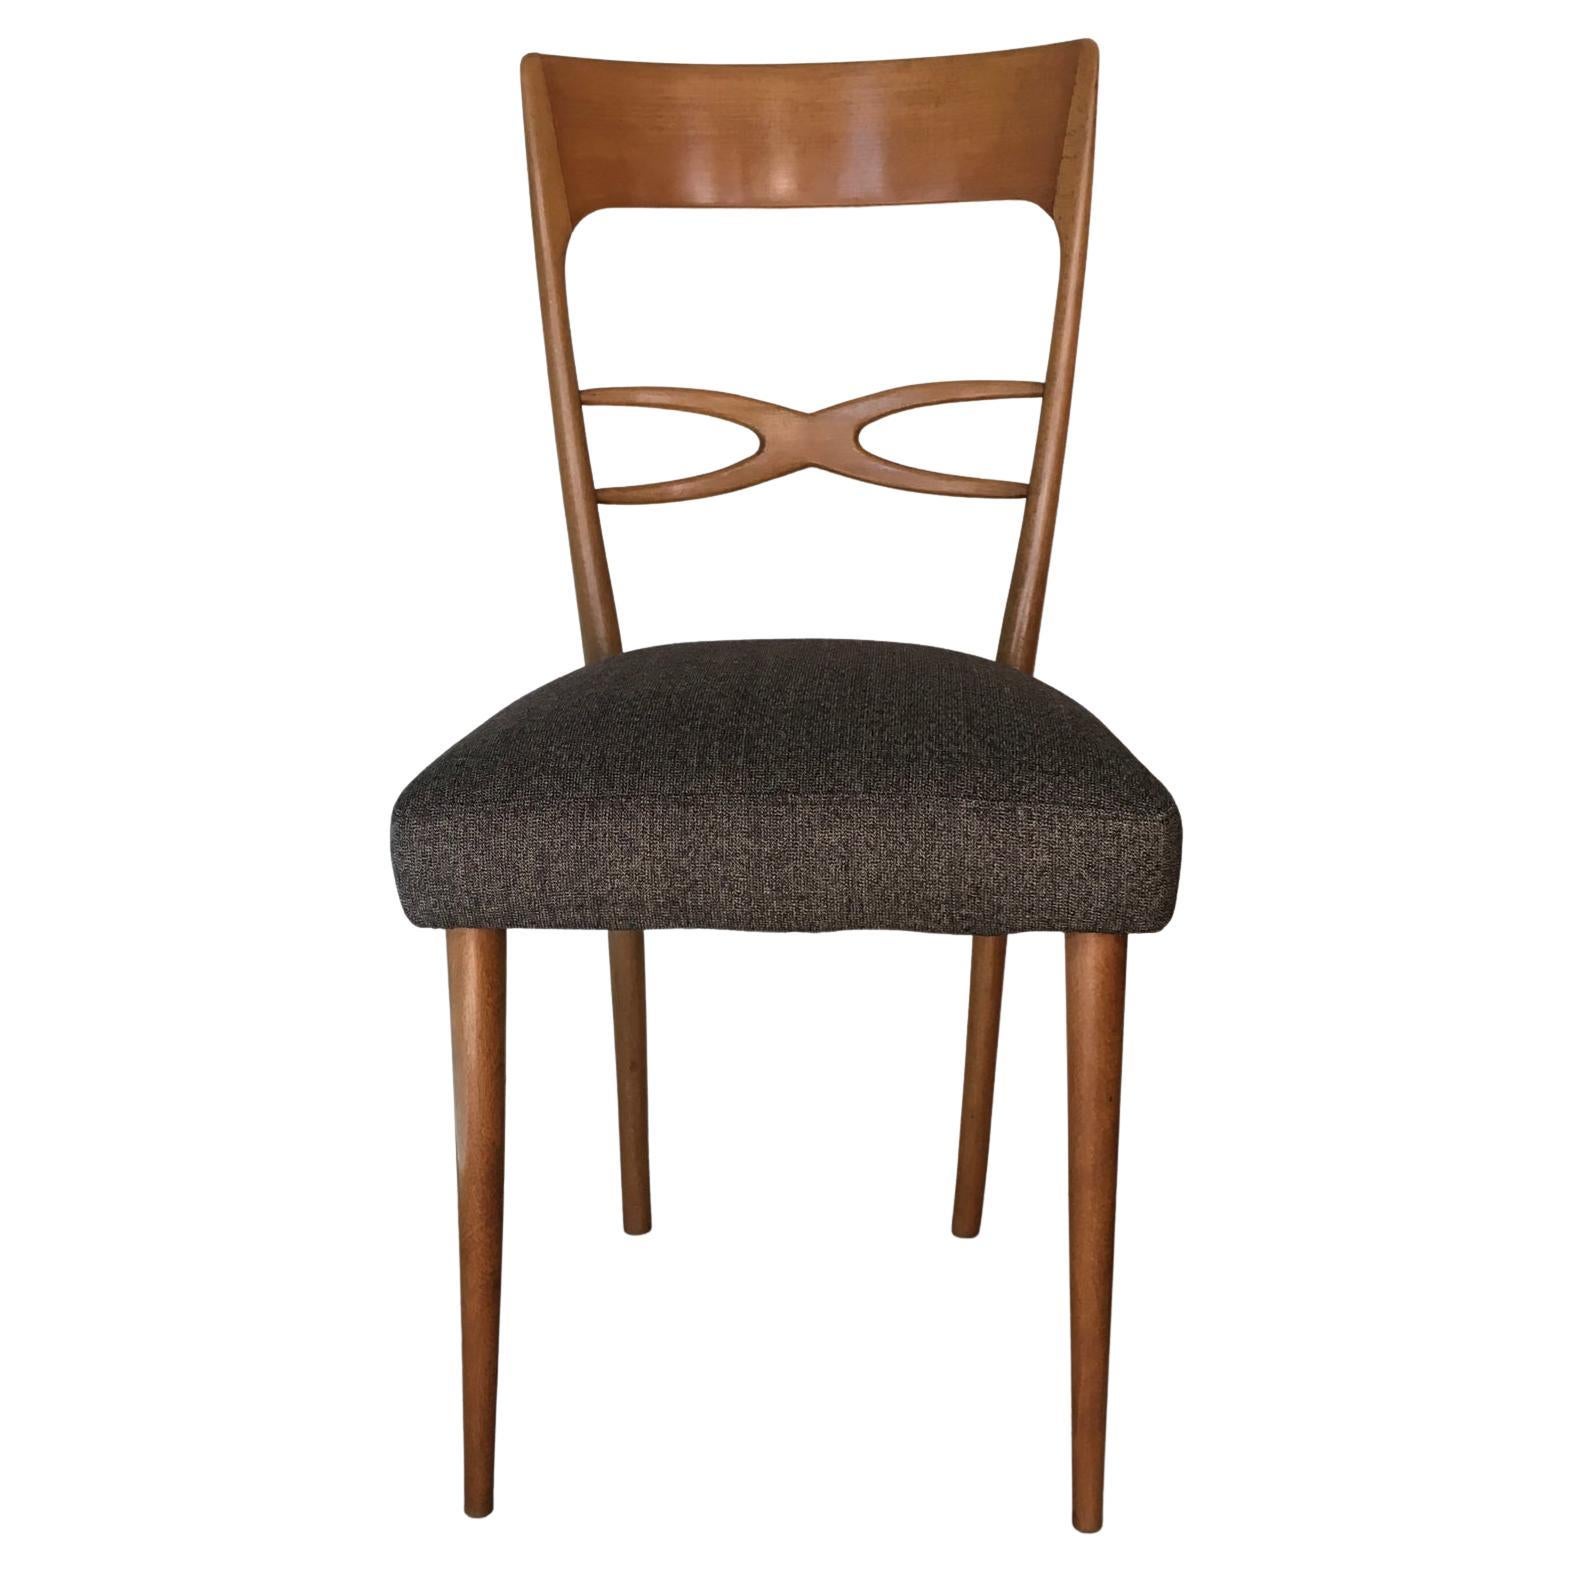 Mid-Century Modern 6 blond wood midcentury Italian dining chairs, 1950s, attrib. to Melchiorre Bega